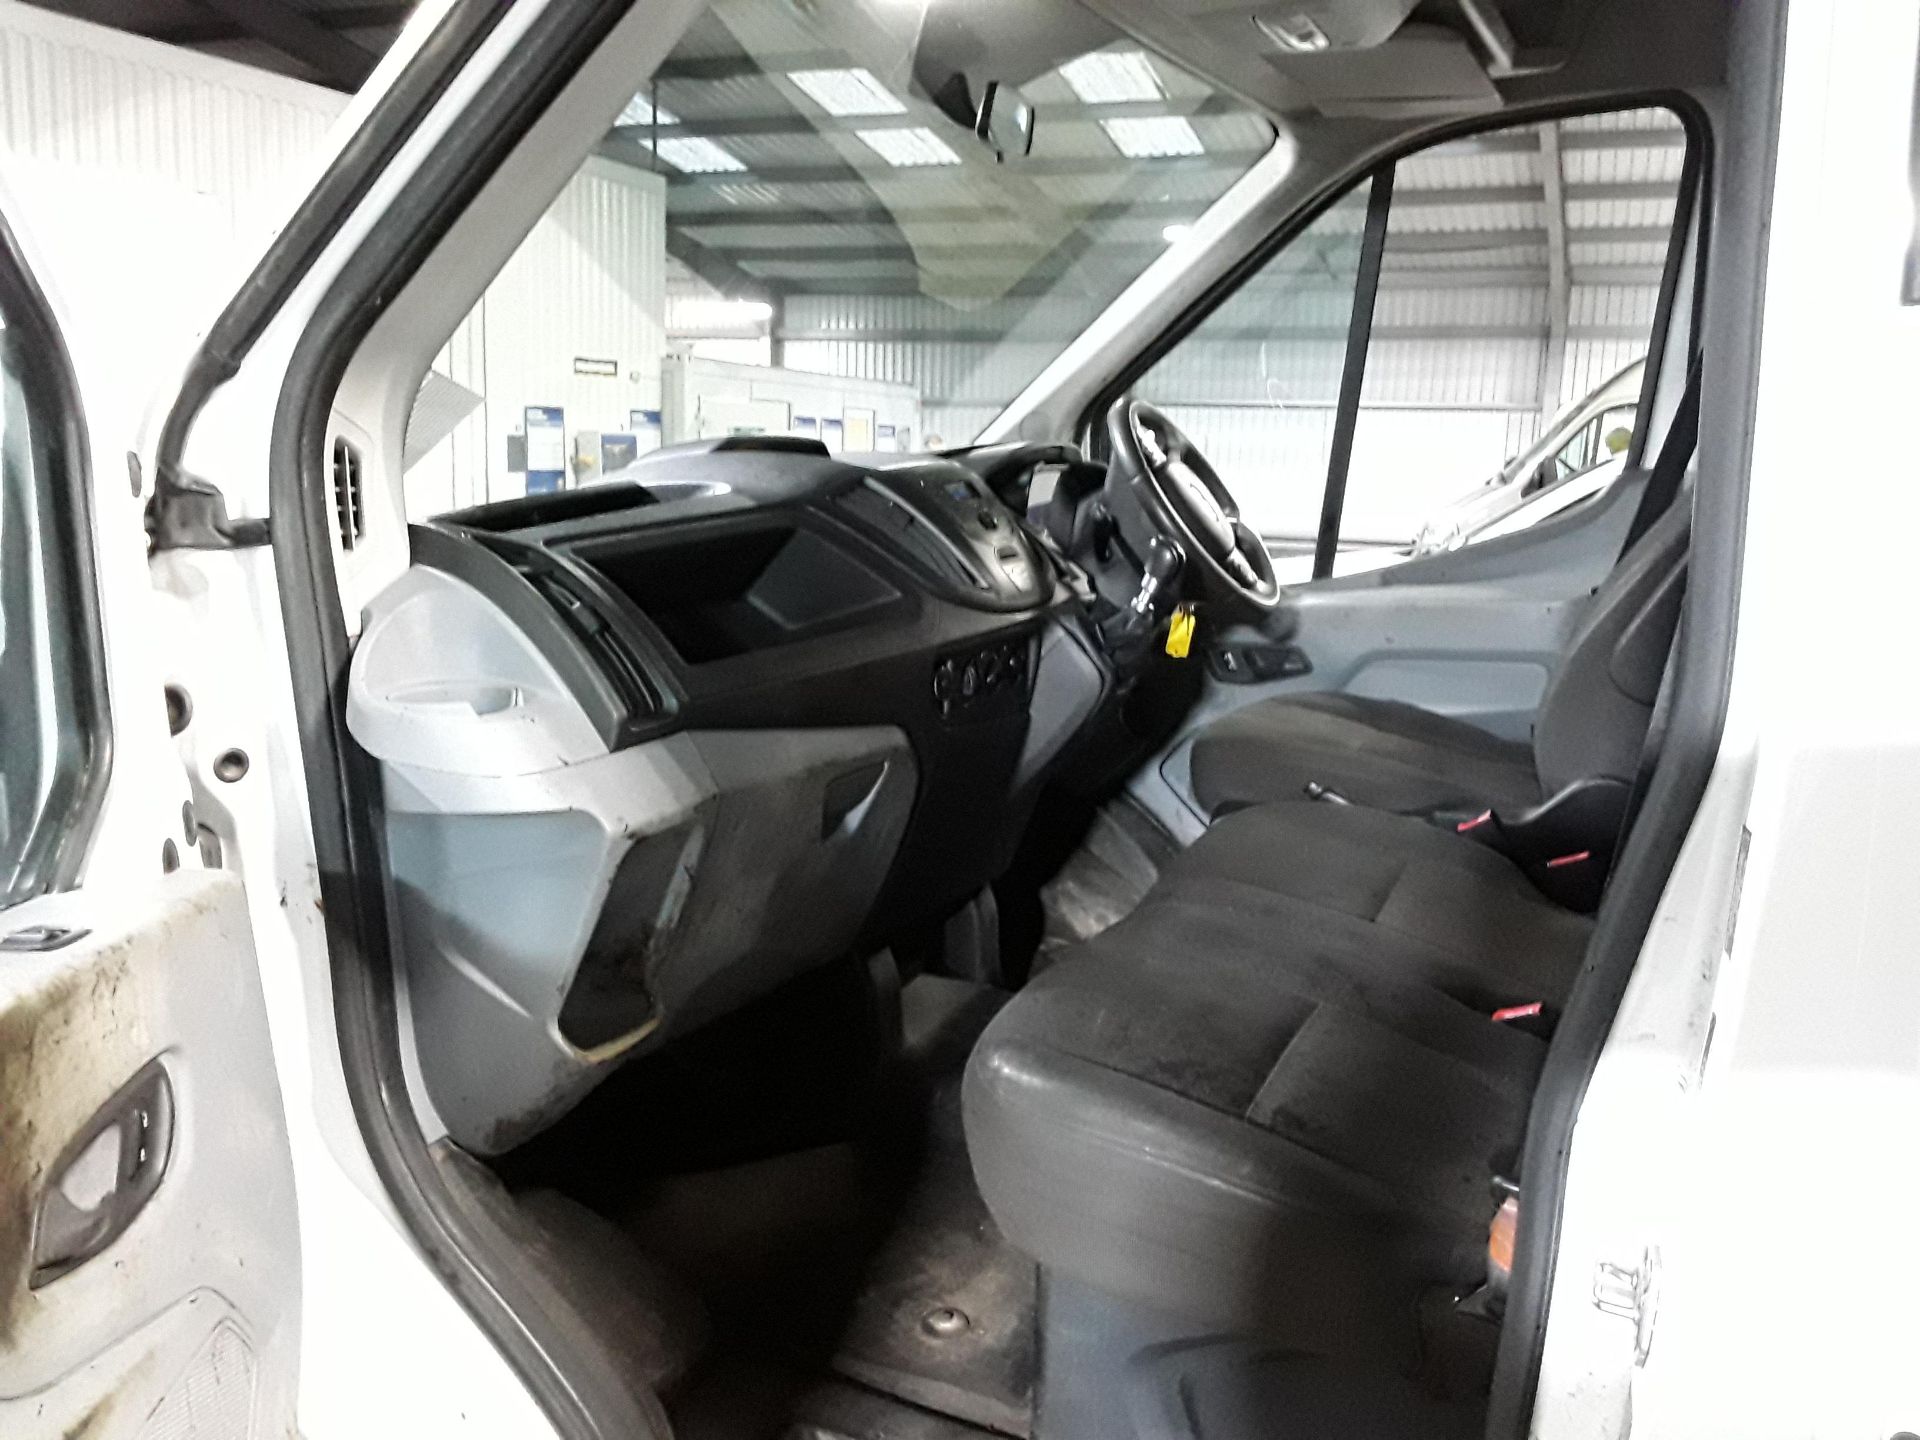 (RESERVE MET)Ford Transit 350 2.0 TDCI Double Cab Tipper 2019 19 Reg - DRW - ULEZ Euro 6 - 64k - Image 3 of 7